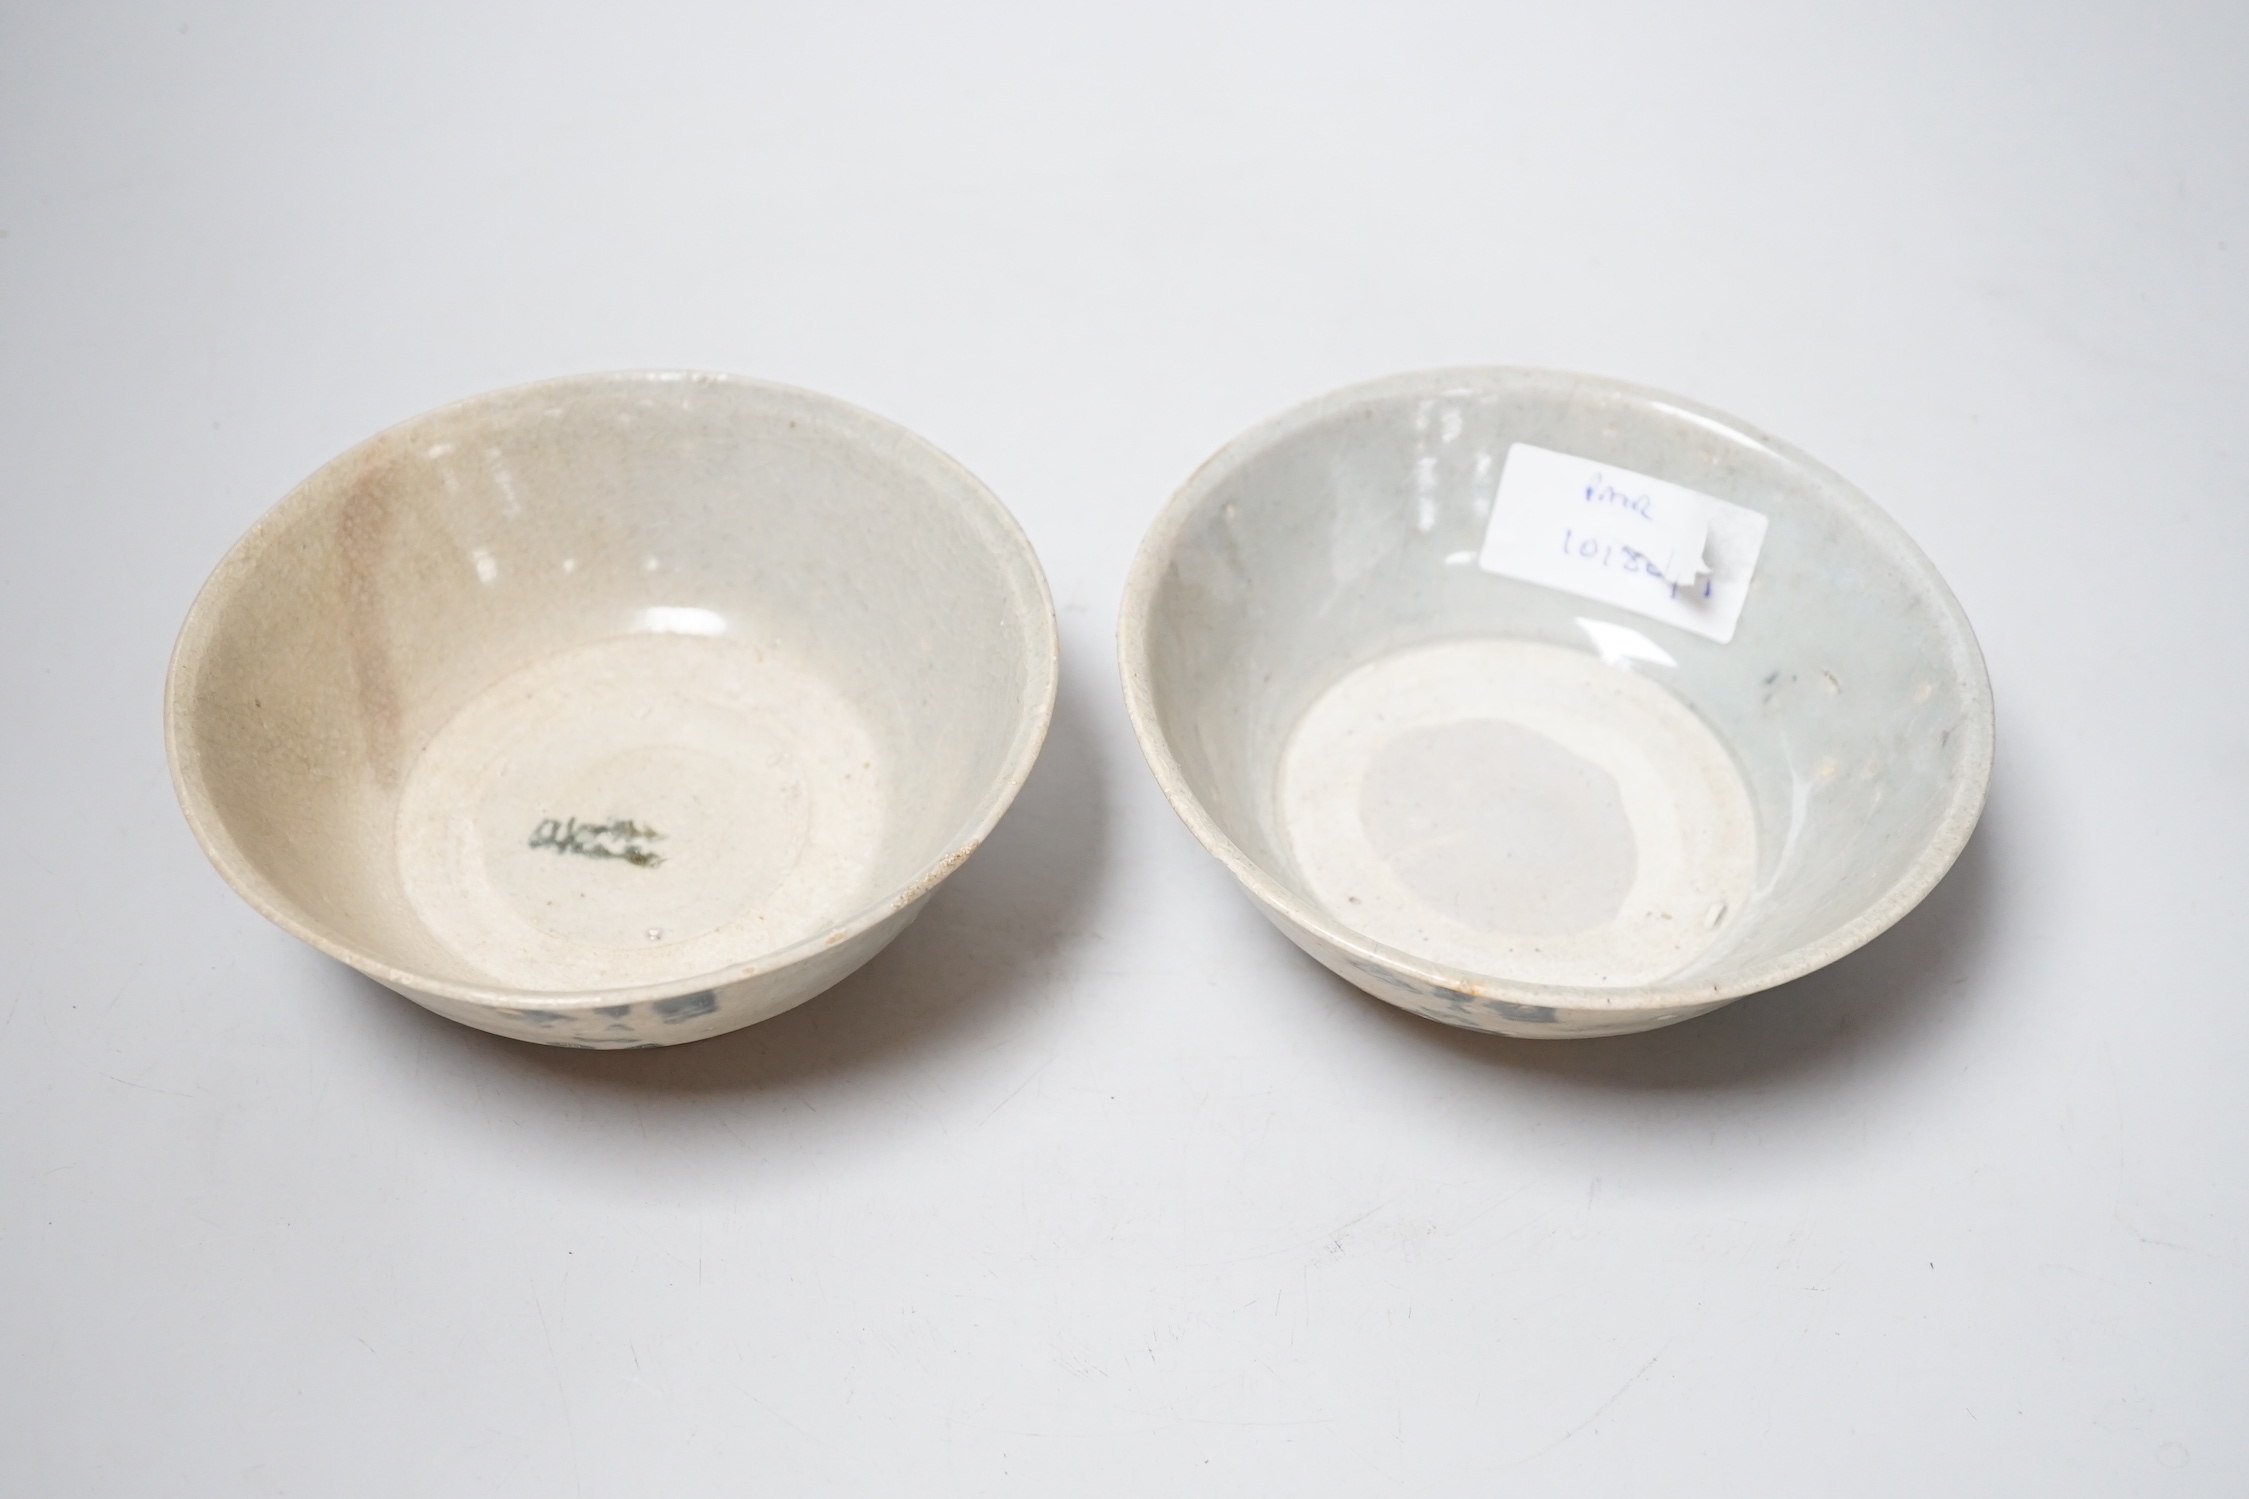 A pair of Tek Sing cargo blue and white bowls, 15cm diameter